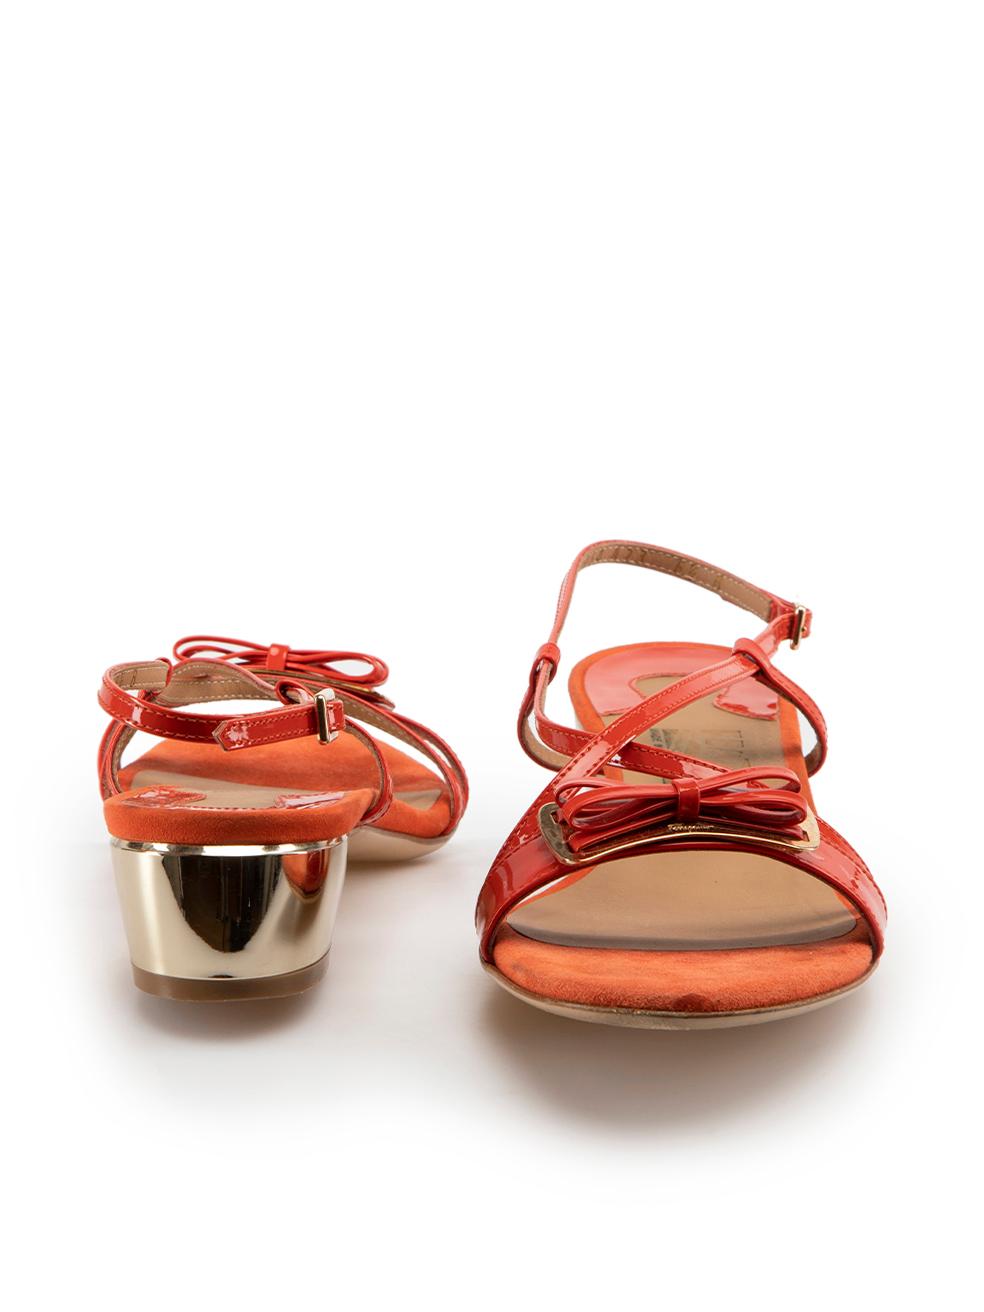 Salvatore Ferragamo Orange Patent Leather Sandals Size US 6.5 In Excellent Condition For Sale In London, GB